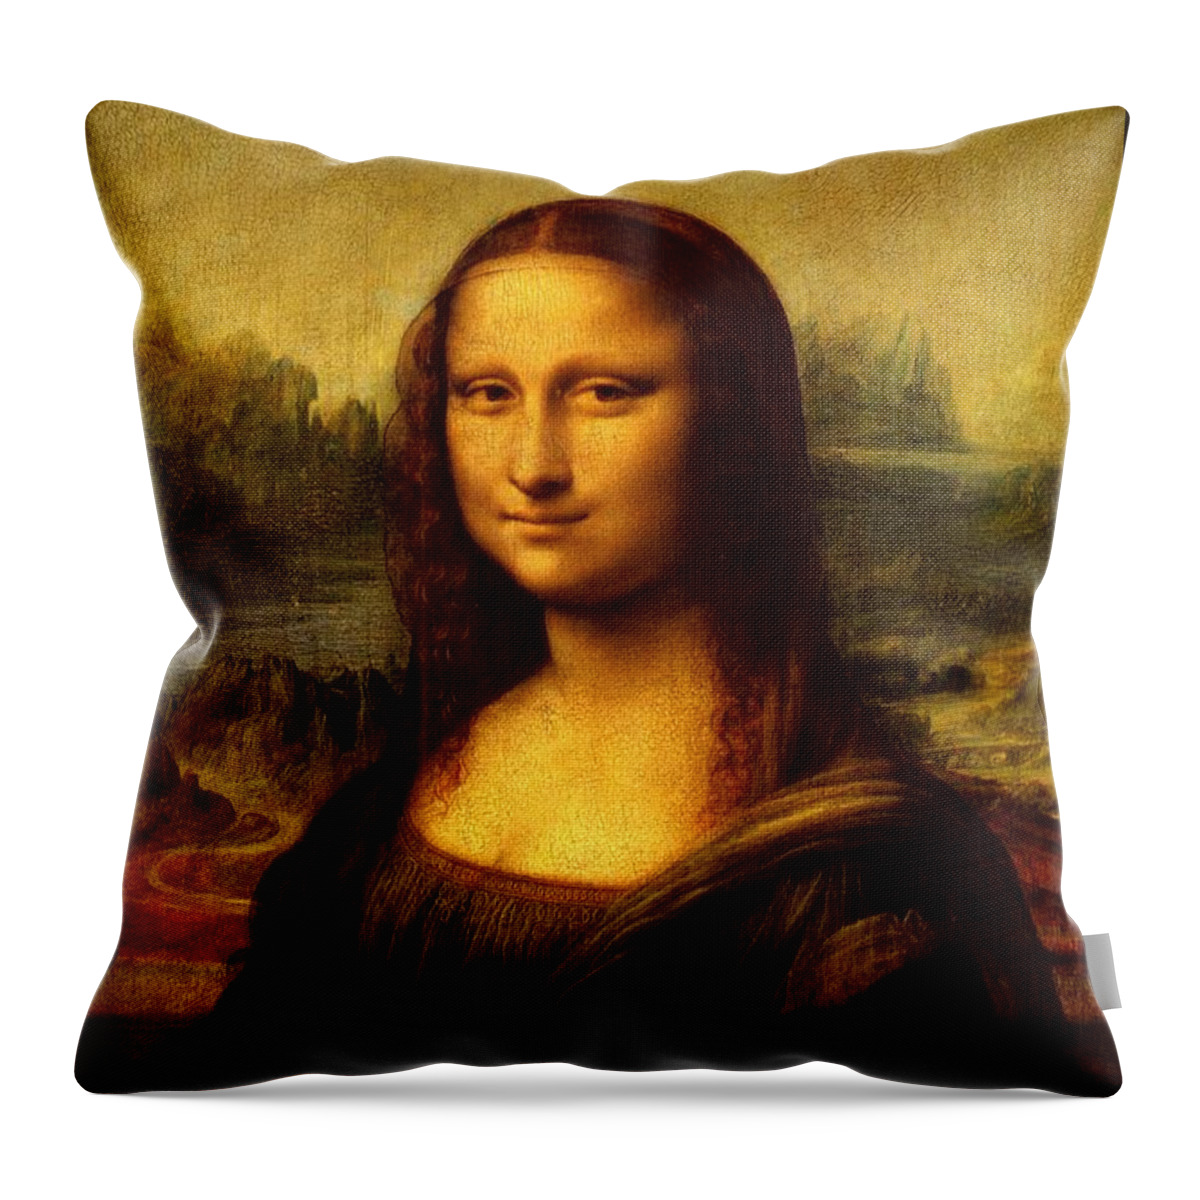 Leonardo Da Vinci Mona Lisa Throw Pillow featuring the painting Mona Lisa #2 by Leonardo da Vinci